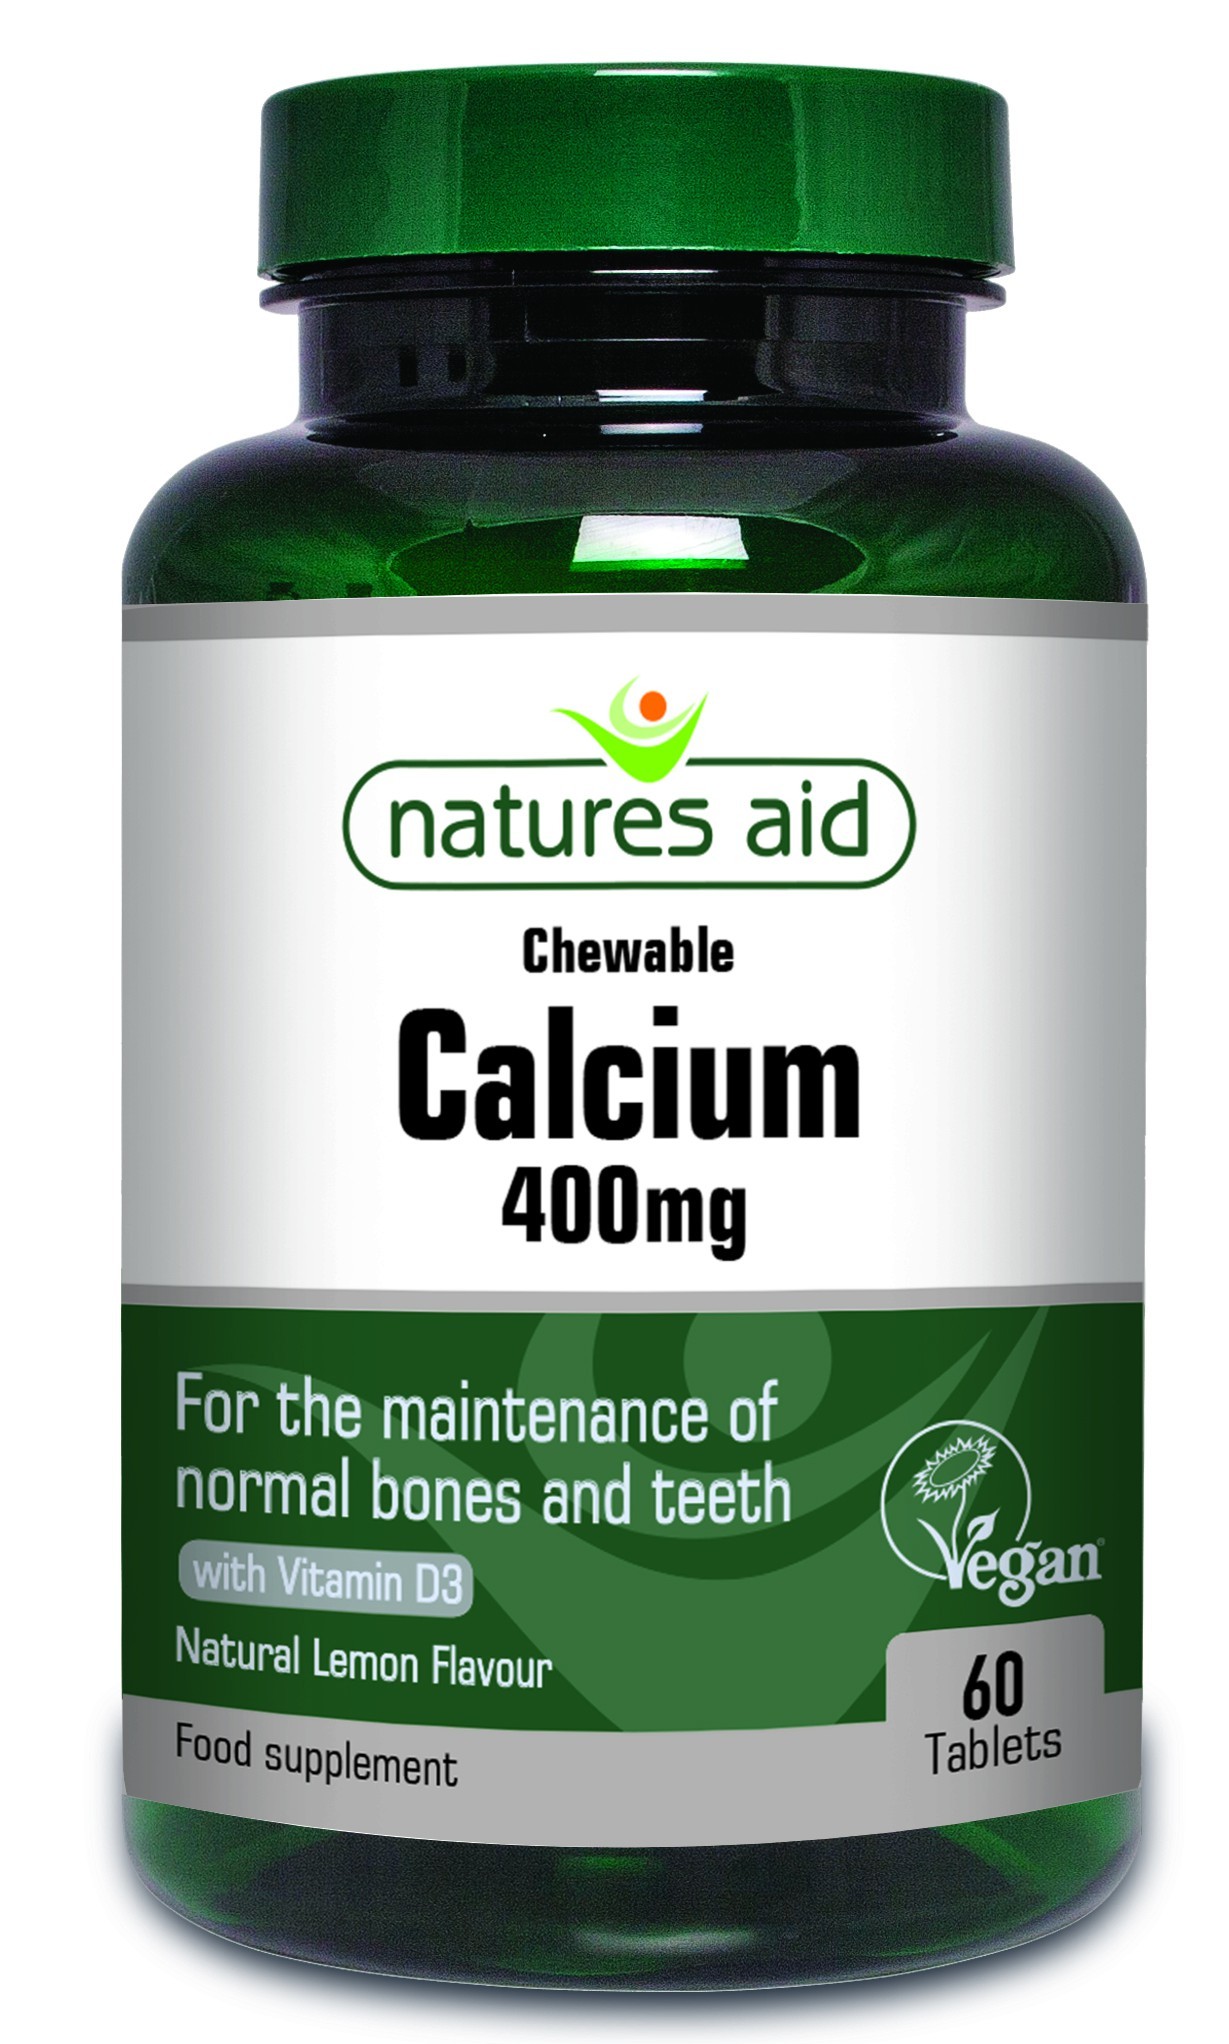 download calcium and vitamin d supplement